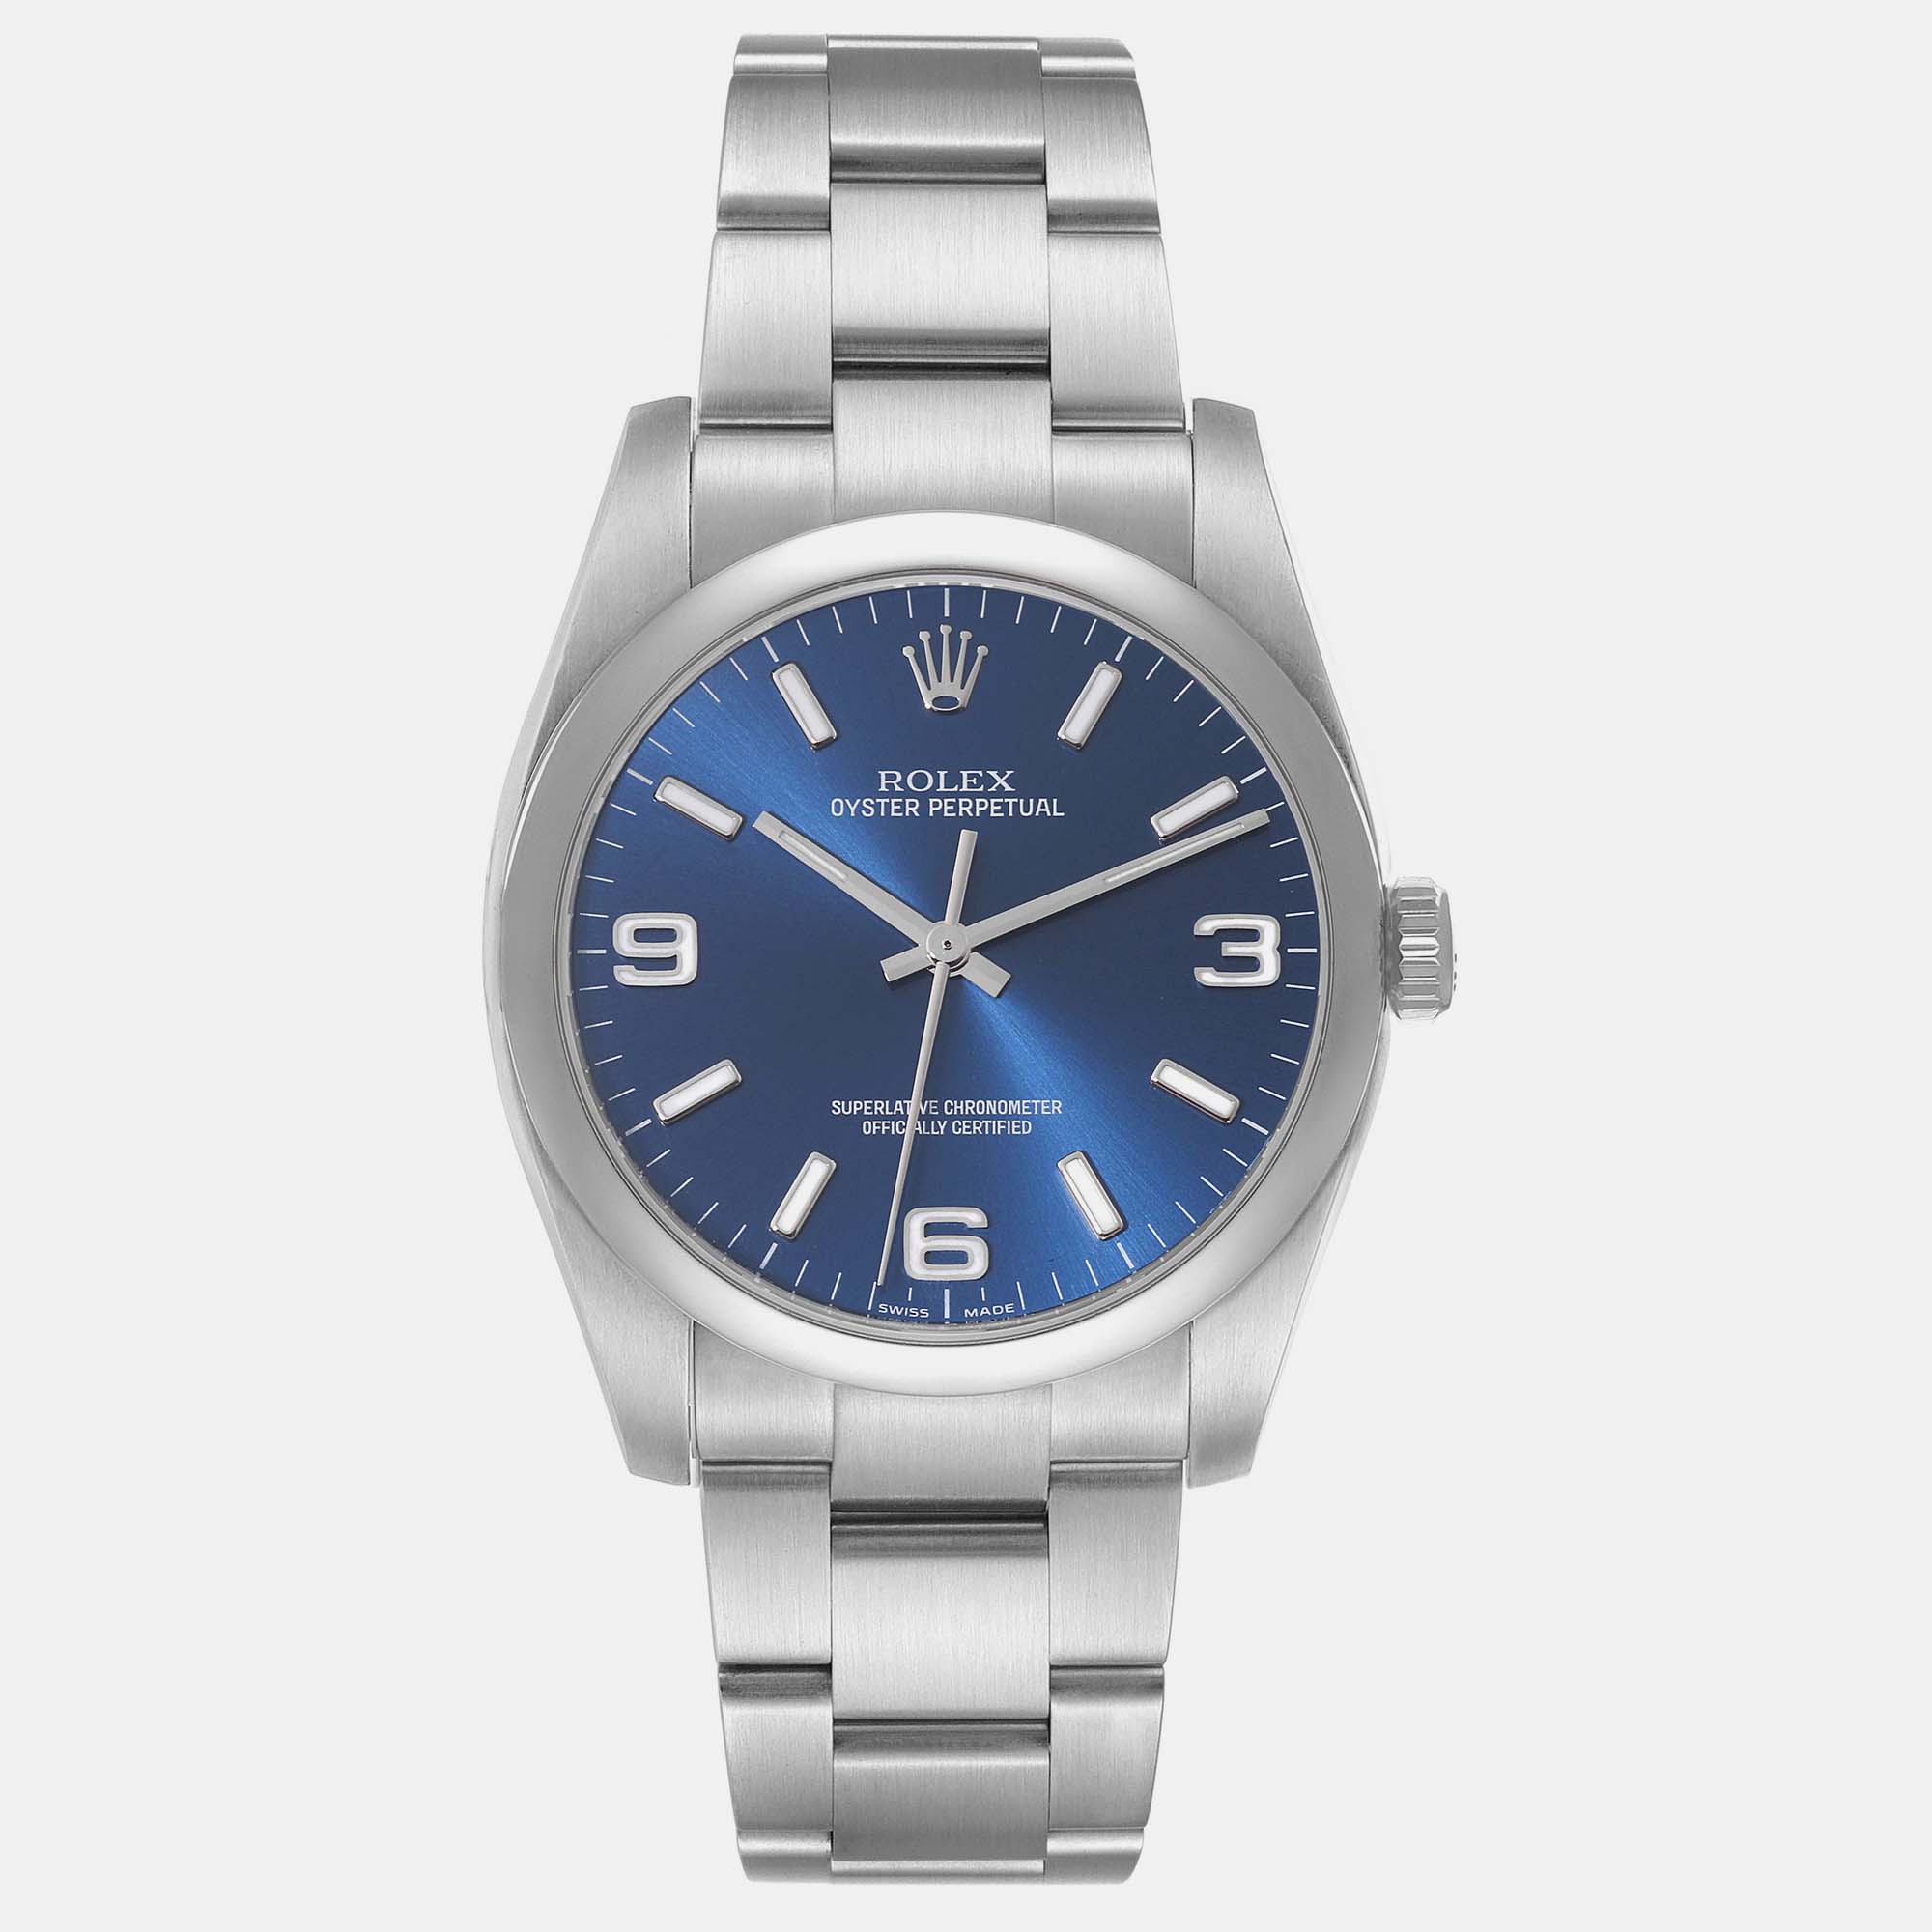 Rolex oyster perpetual blue dial steel men's watch 36.0 mm